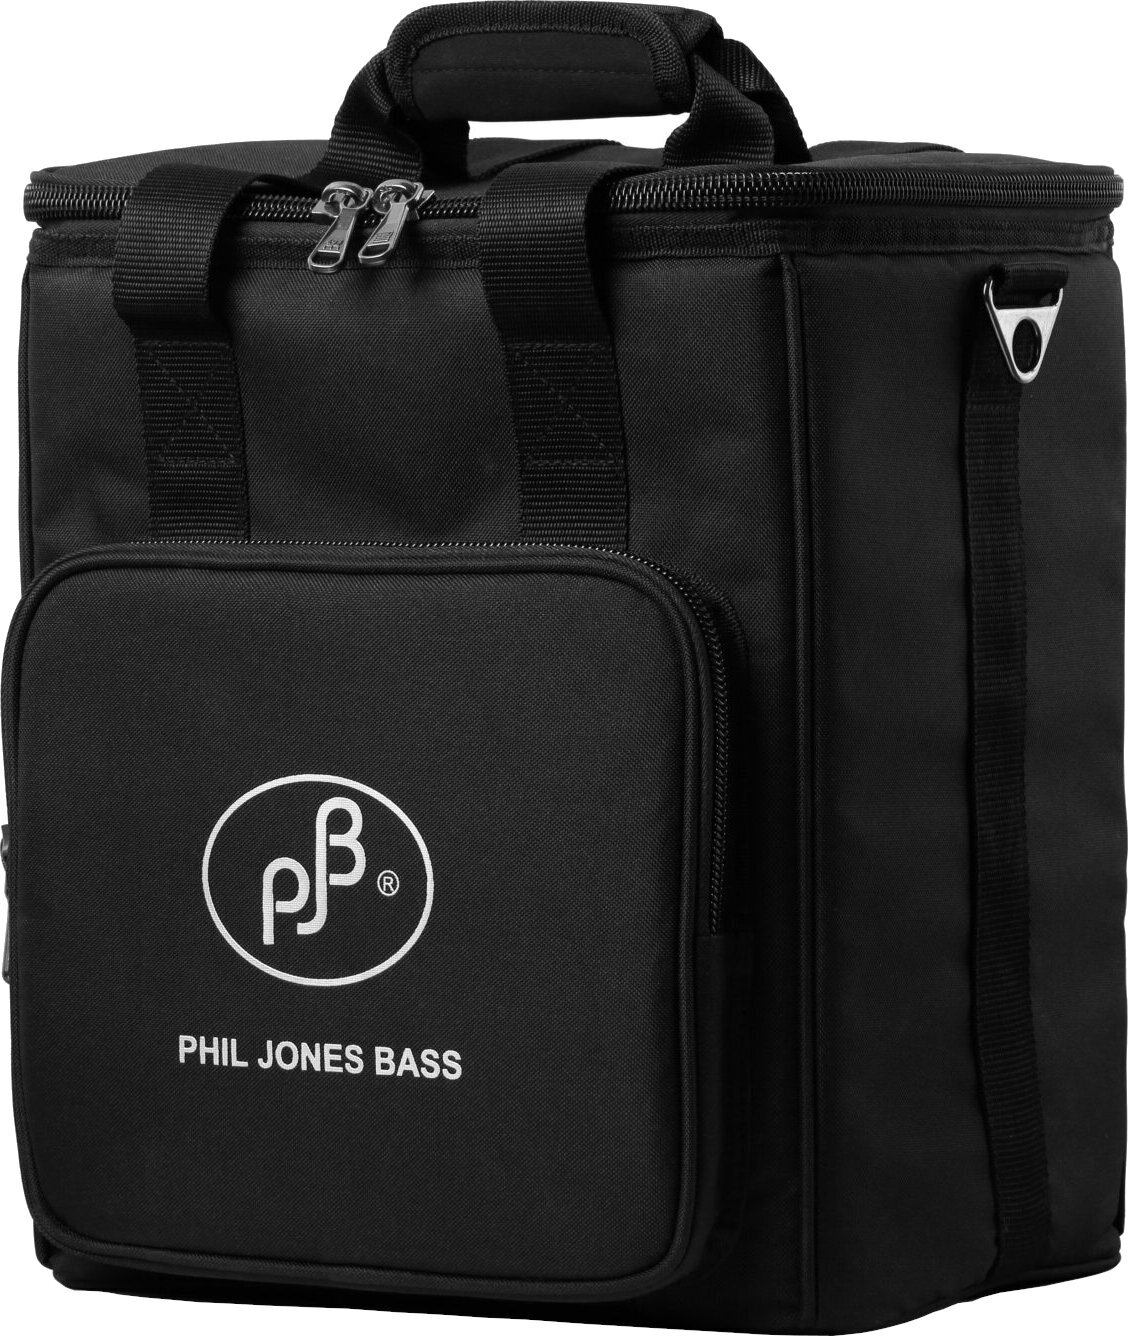 Phil Jones Bass Carry Bag BG-120 Obal pro basový aparát Phil Jones Bass